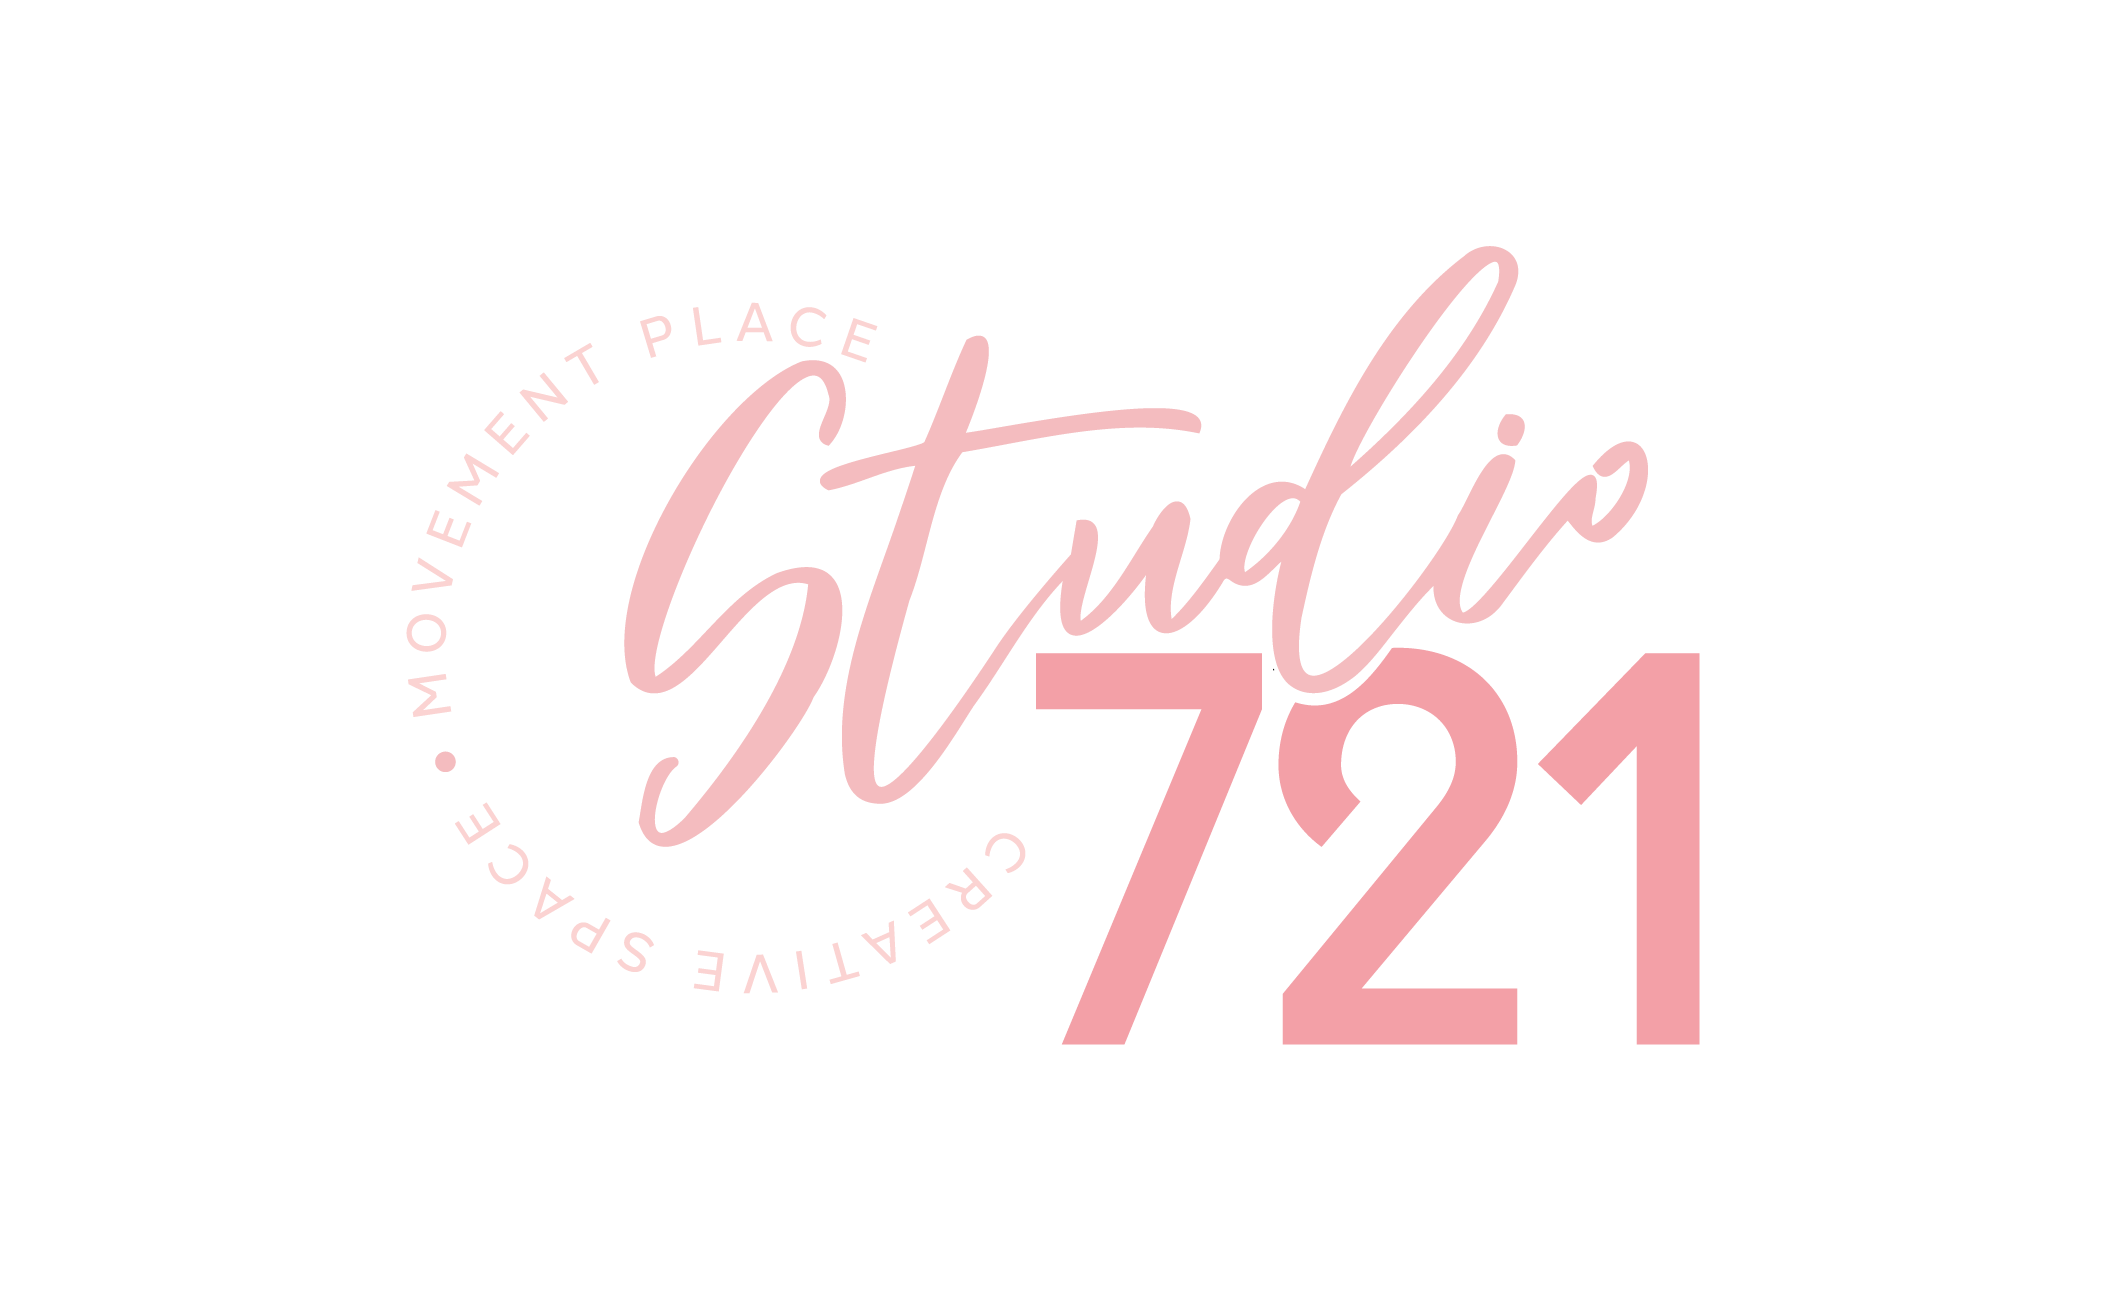 Creative Space • Movement Place - Studio 721